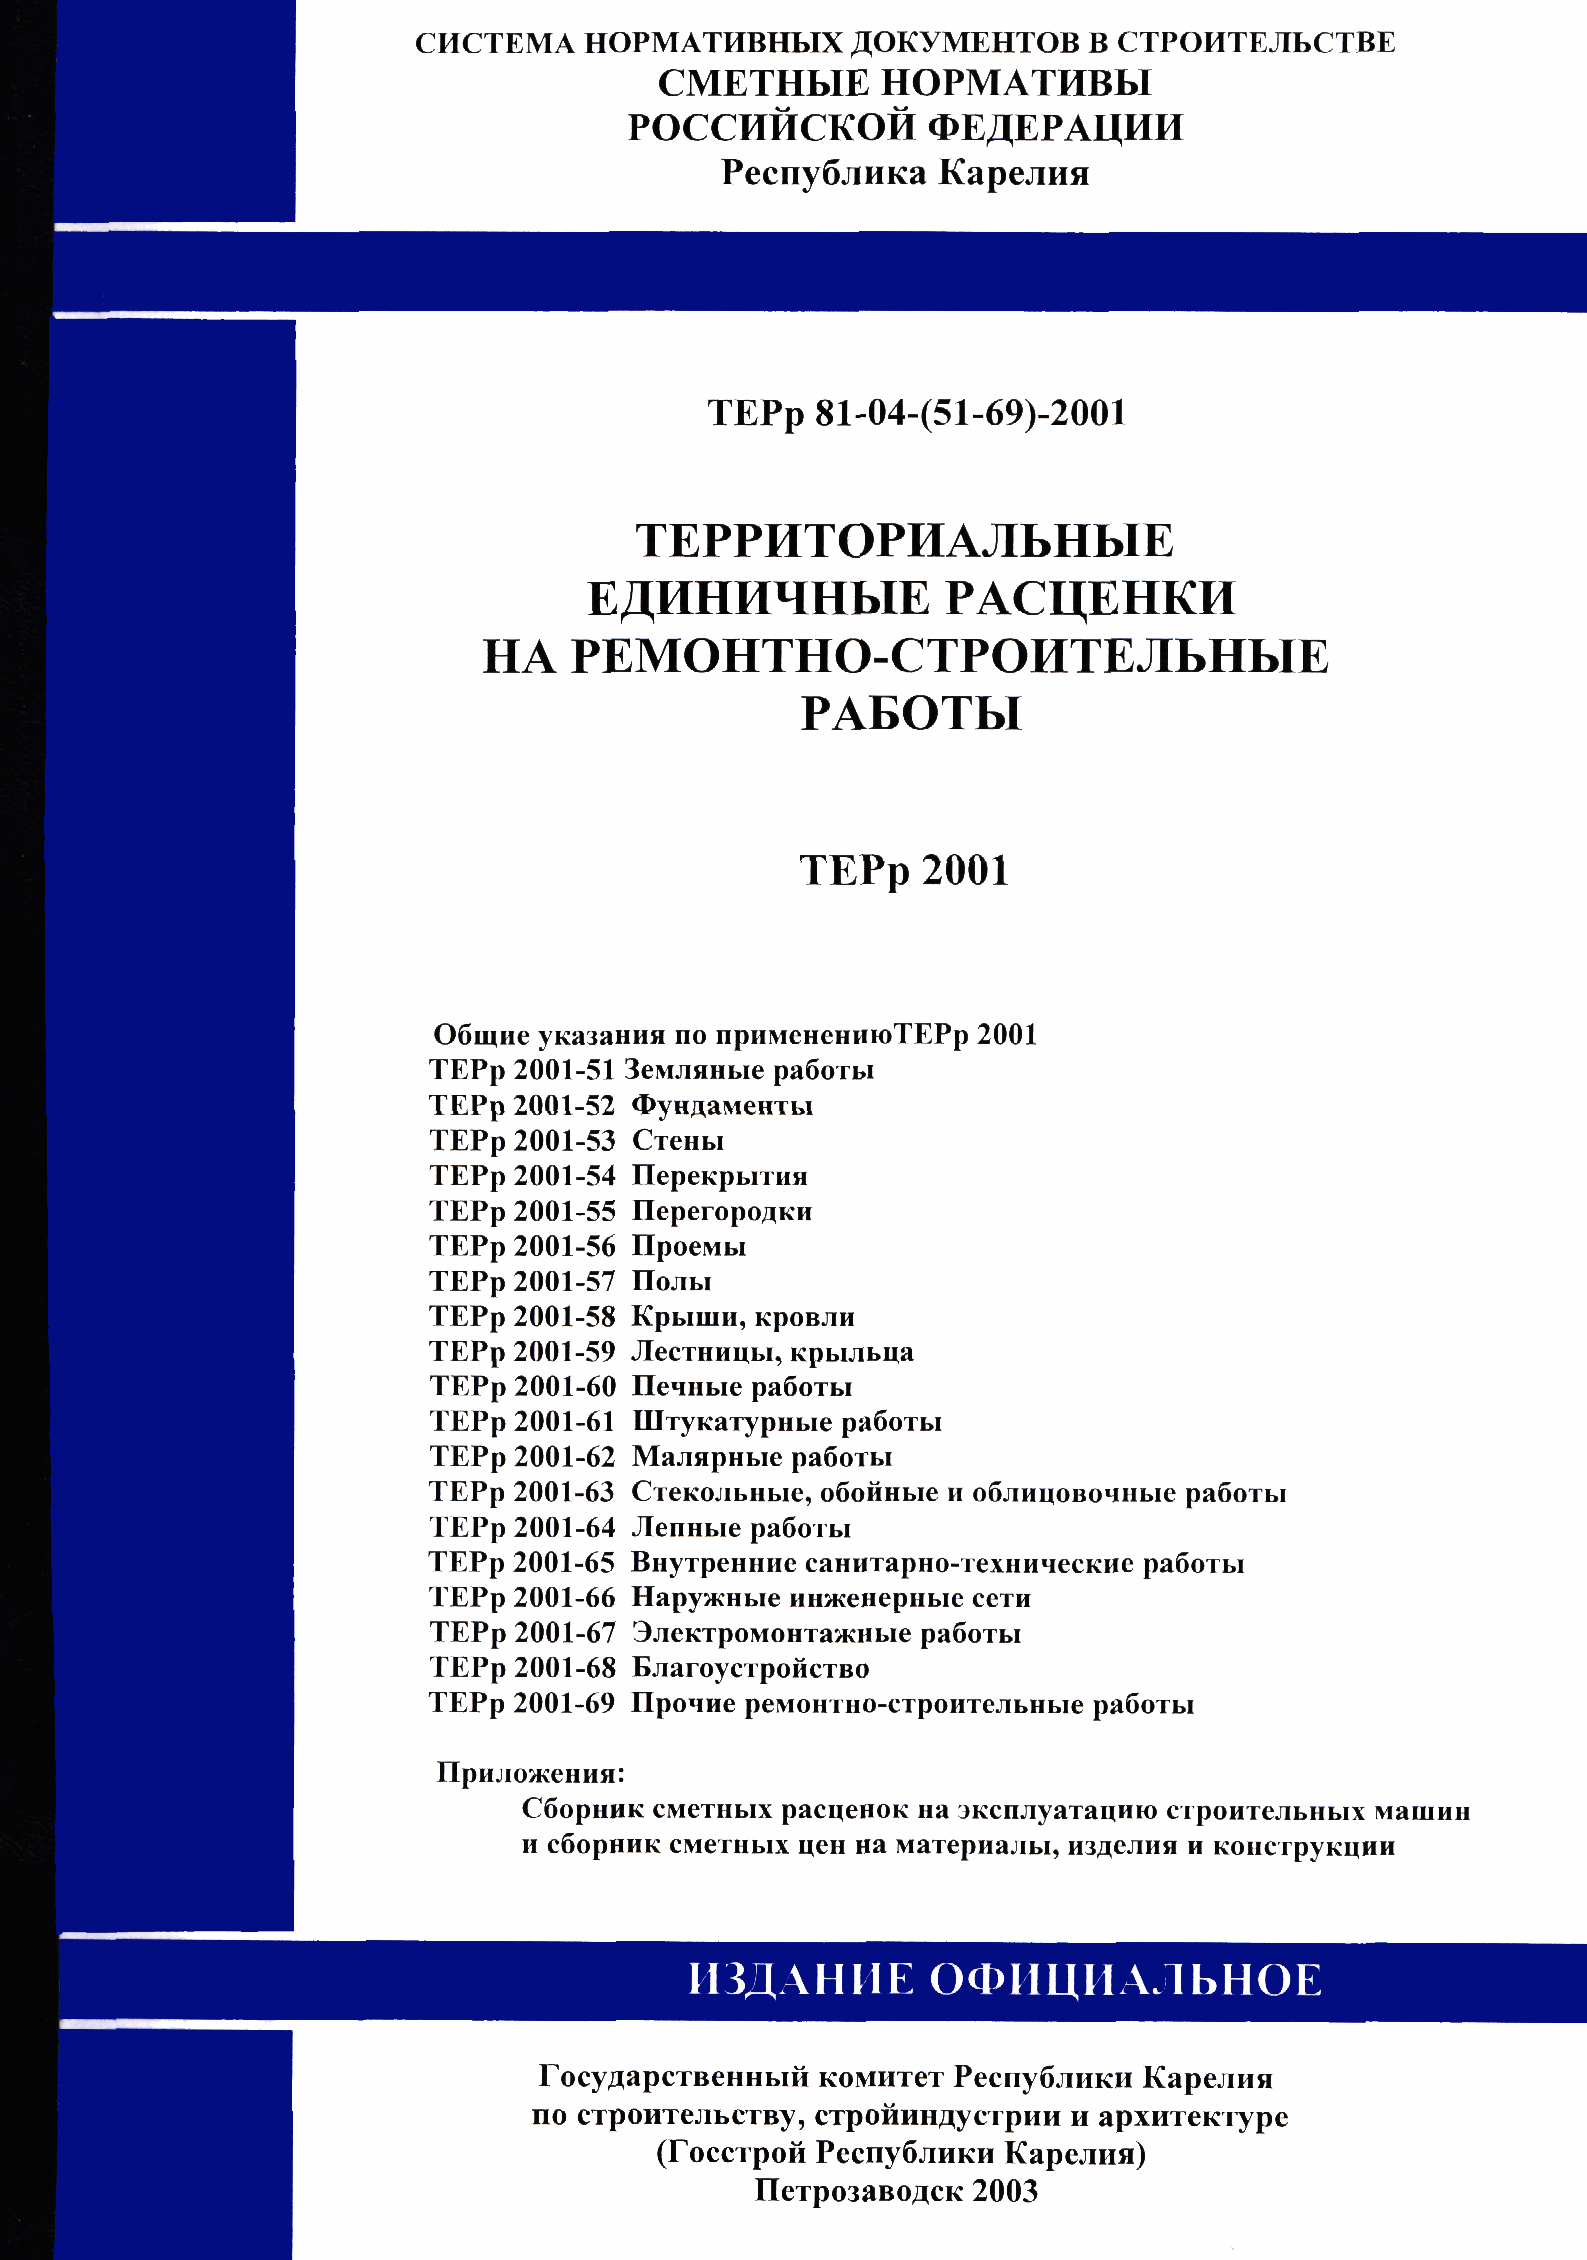 ТЕРр Республика Карелия 2001-54